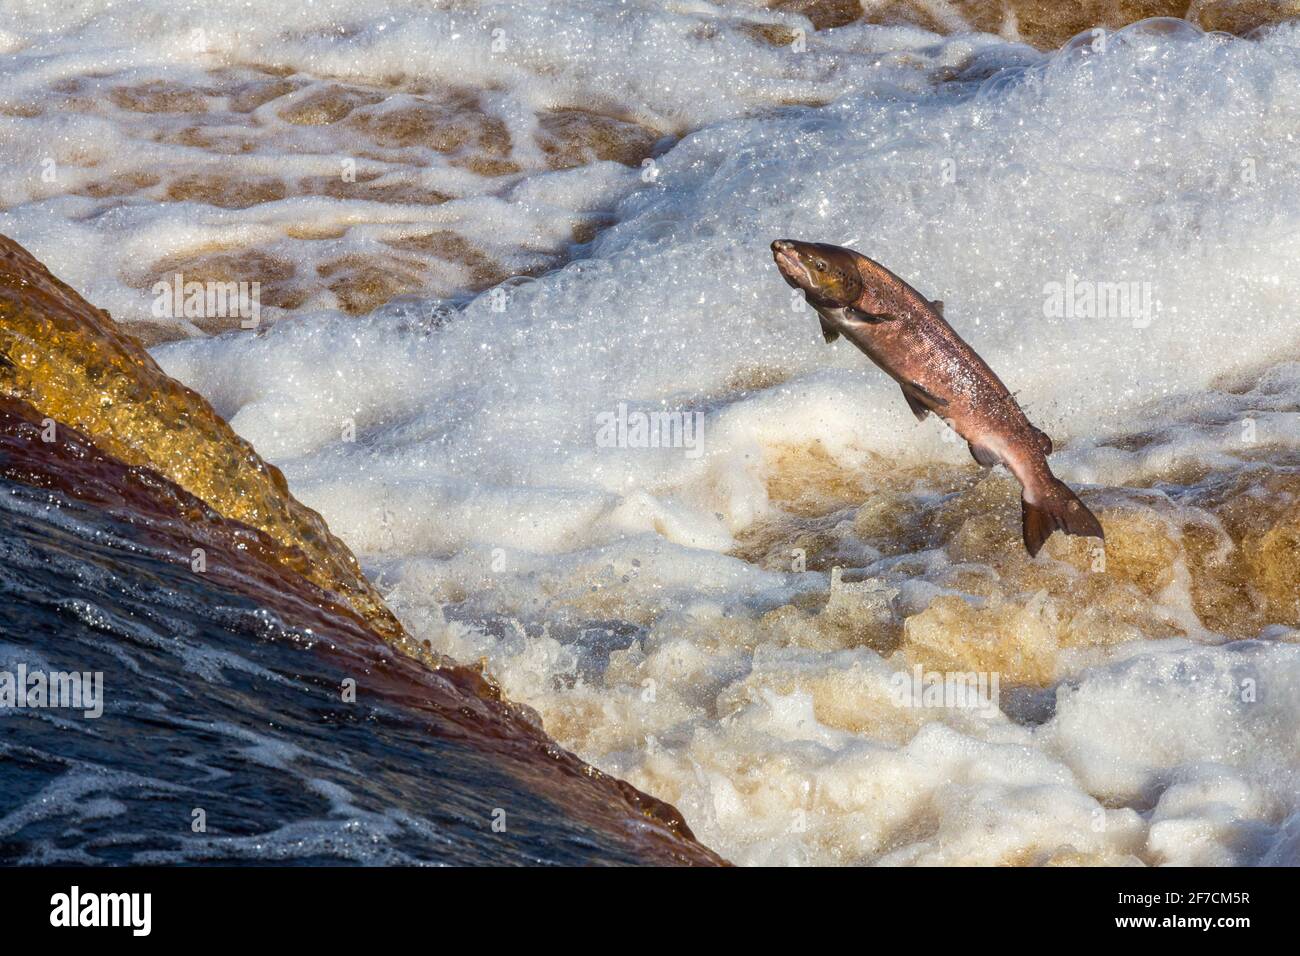 Atlantic salmon (Salmo salar) leaping on upstream migration, River Tyne, Hexham, Northumberland, UK Stock Photo